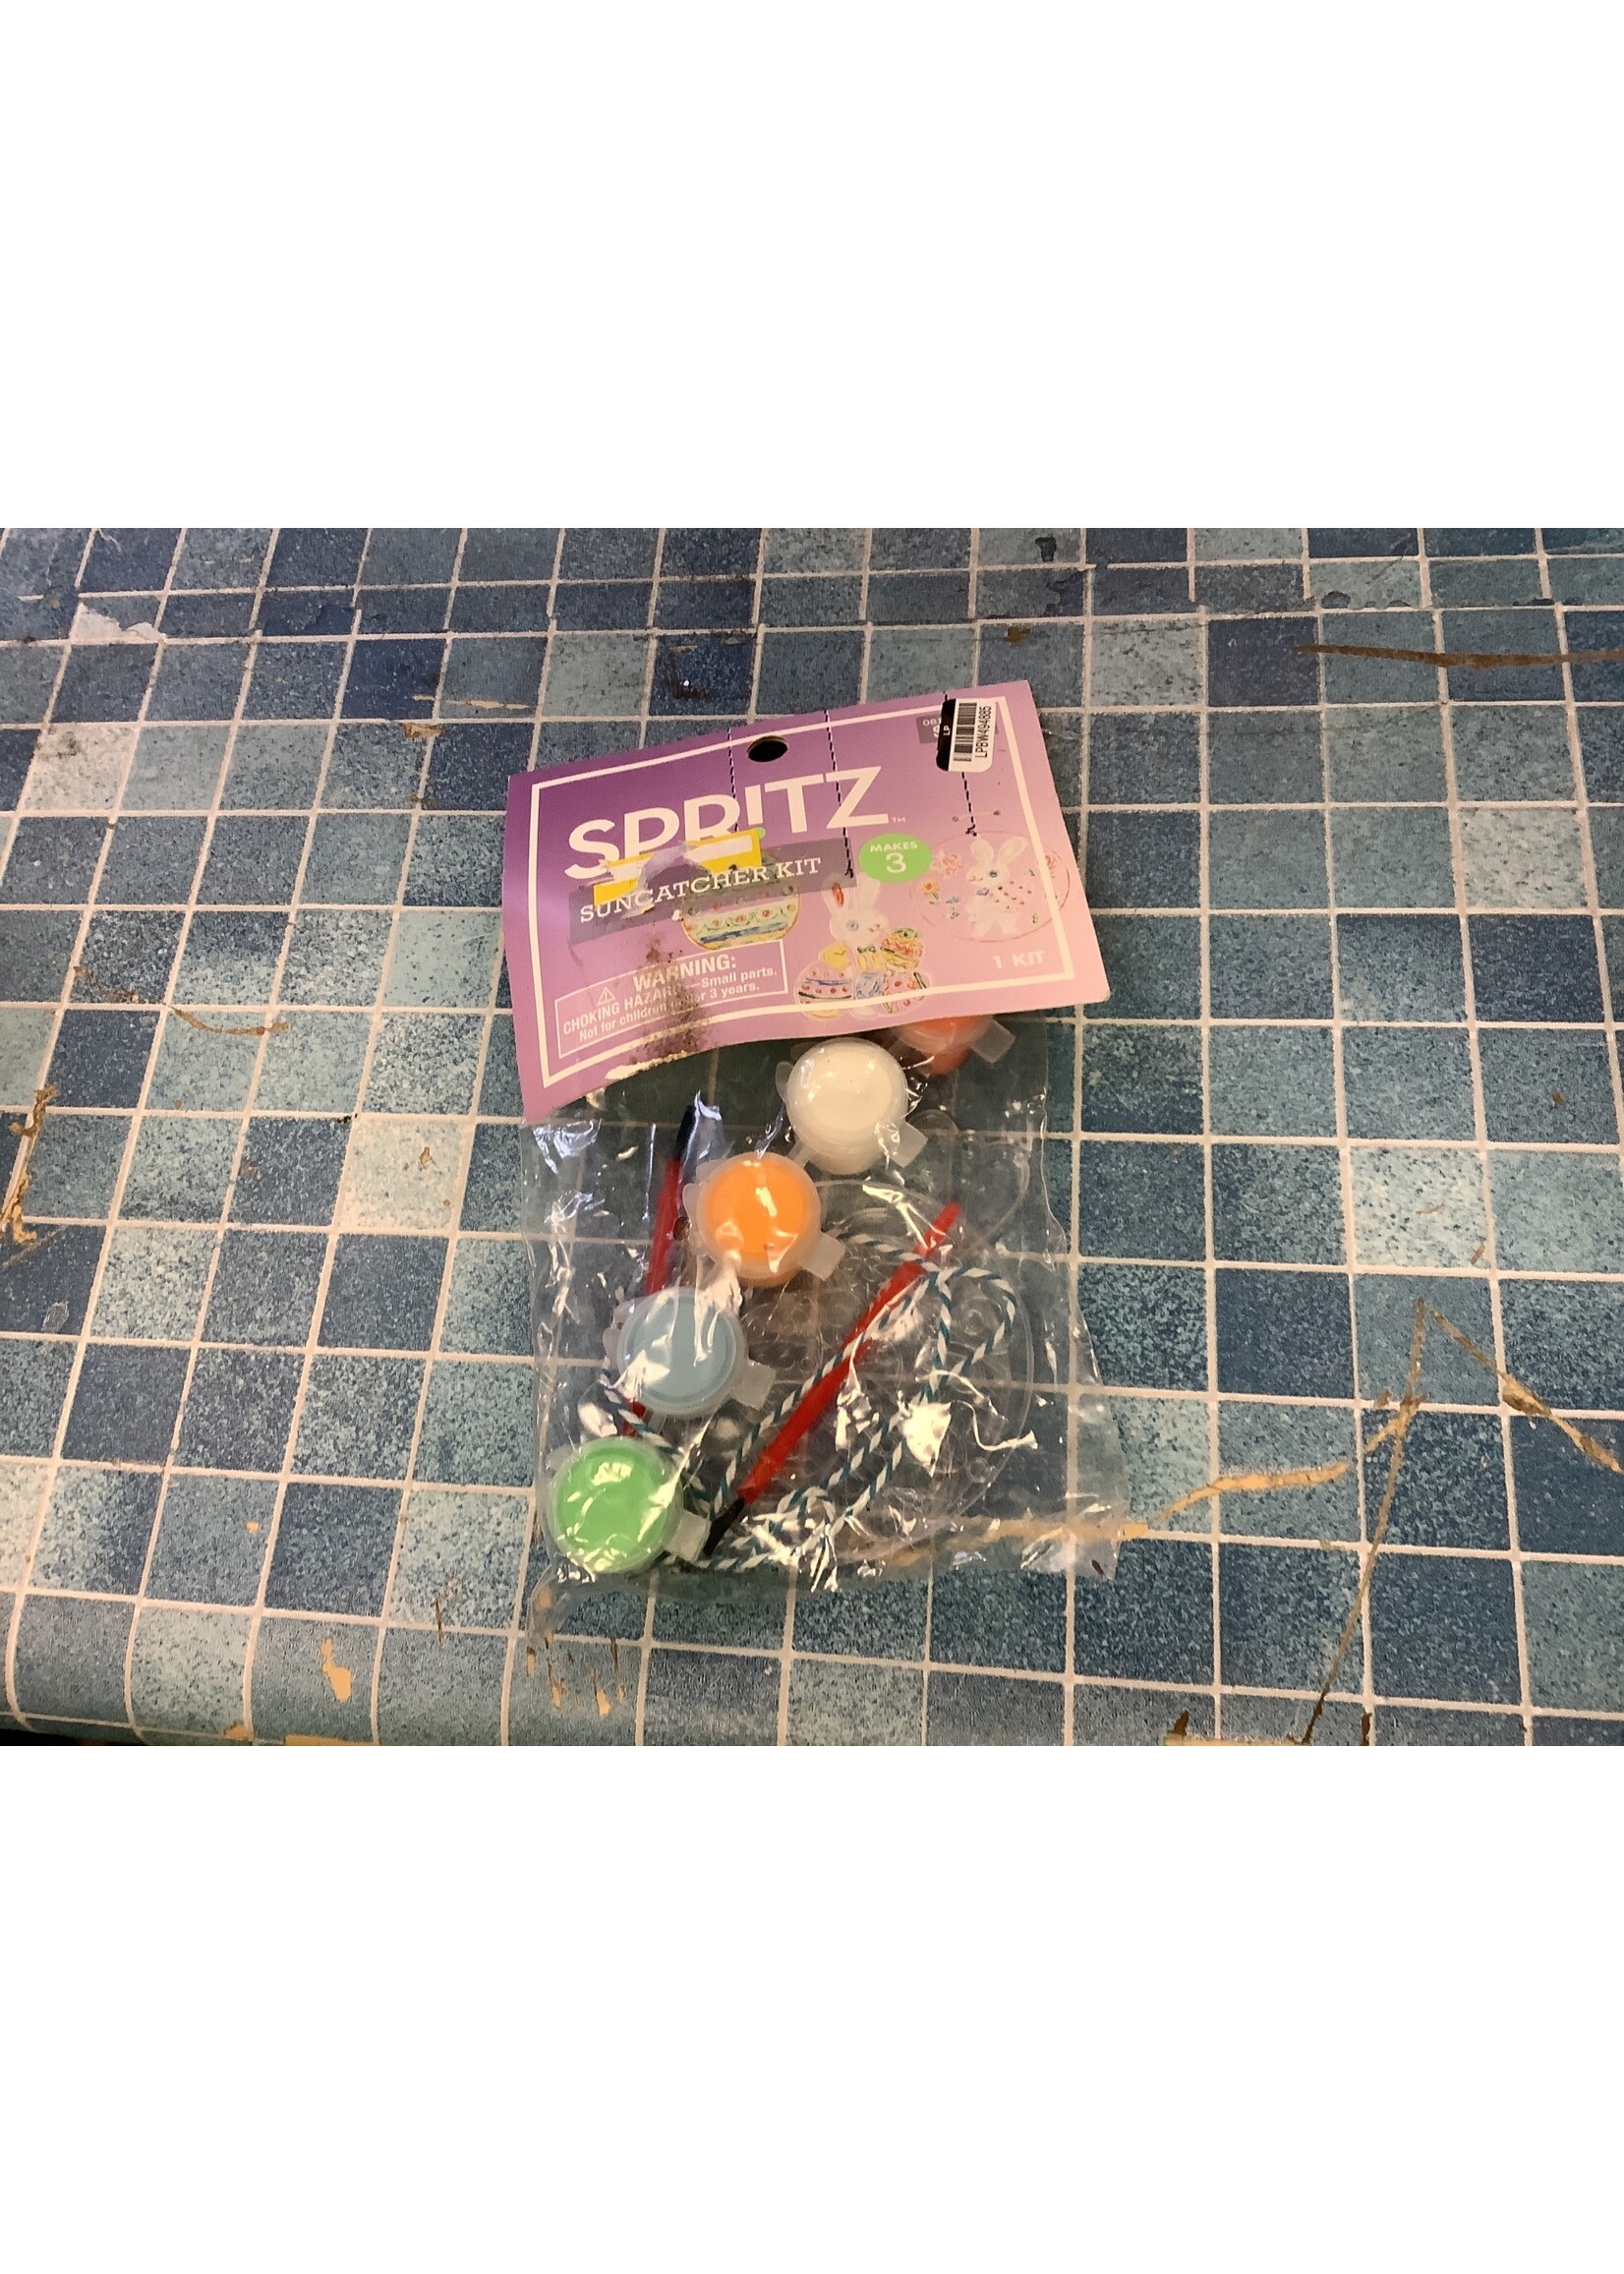 Spritz Spritz Suncatcher Kit